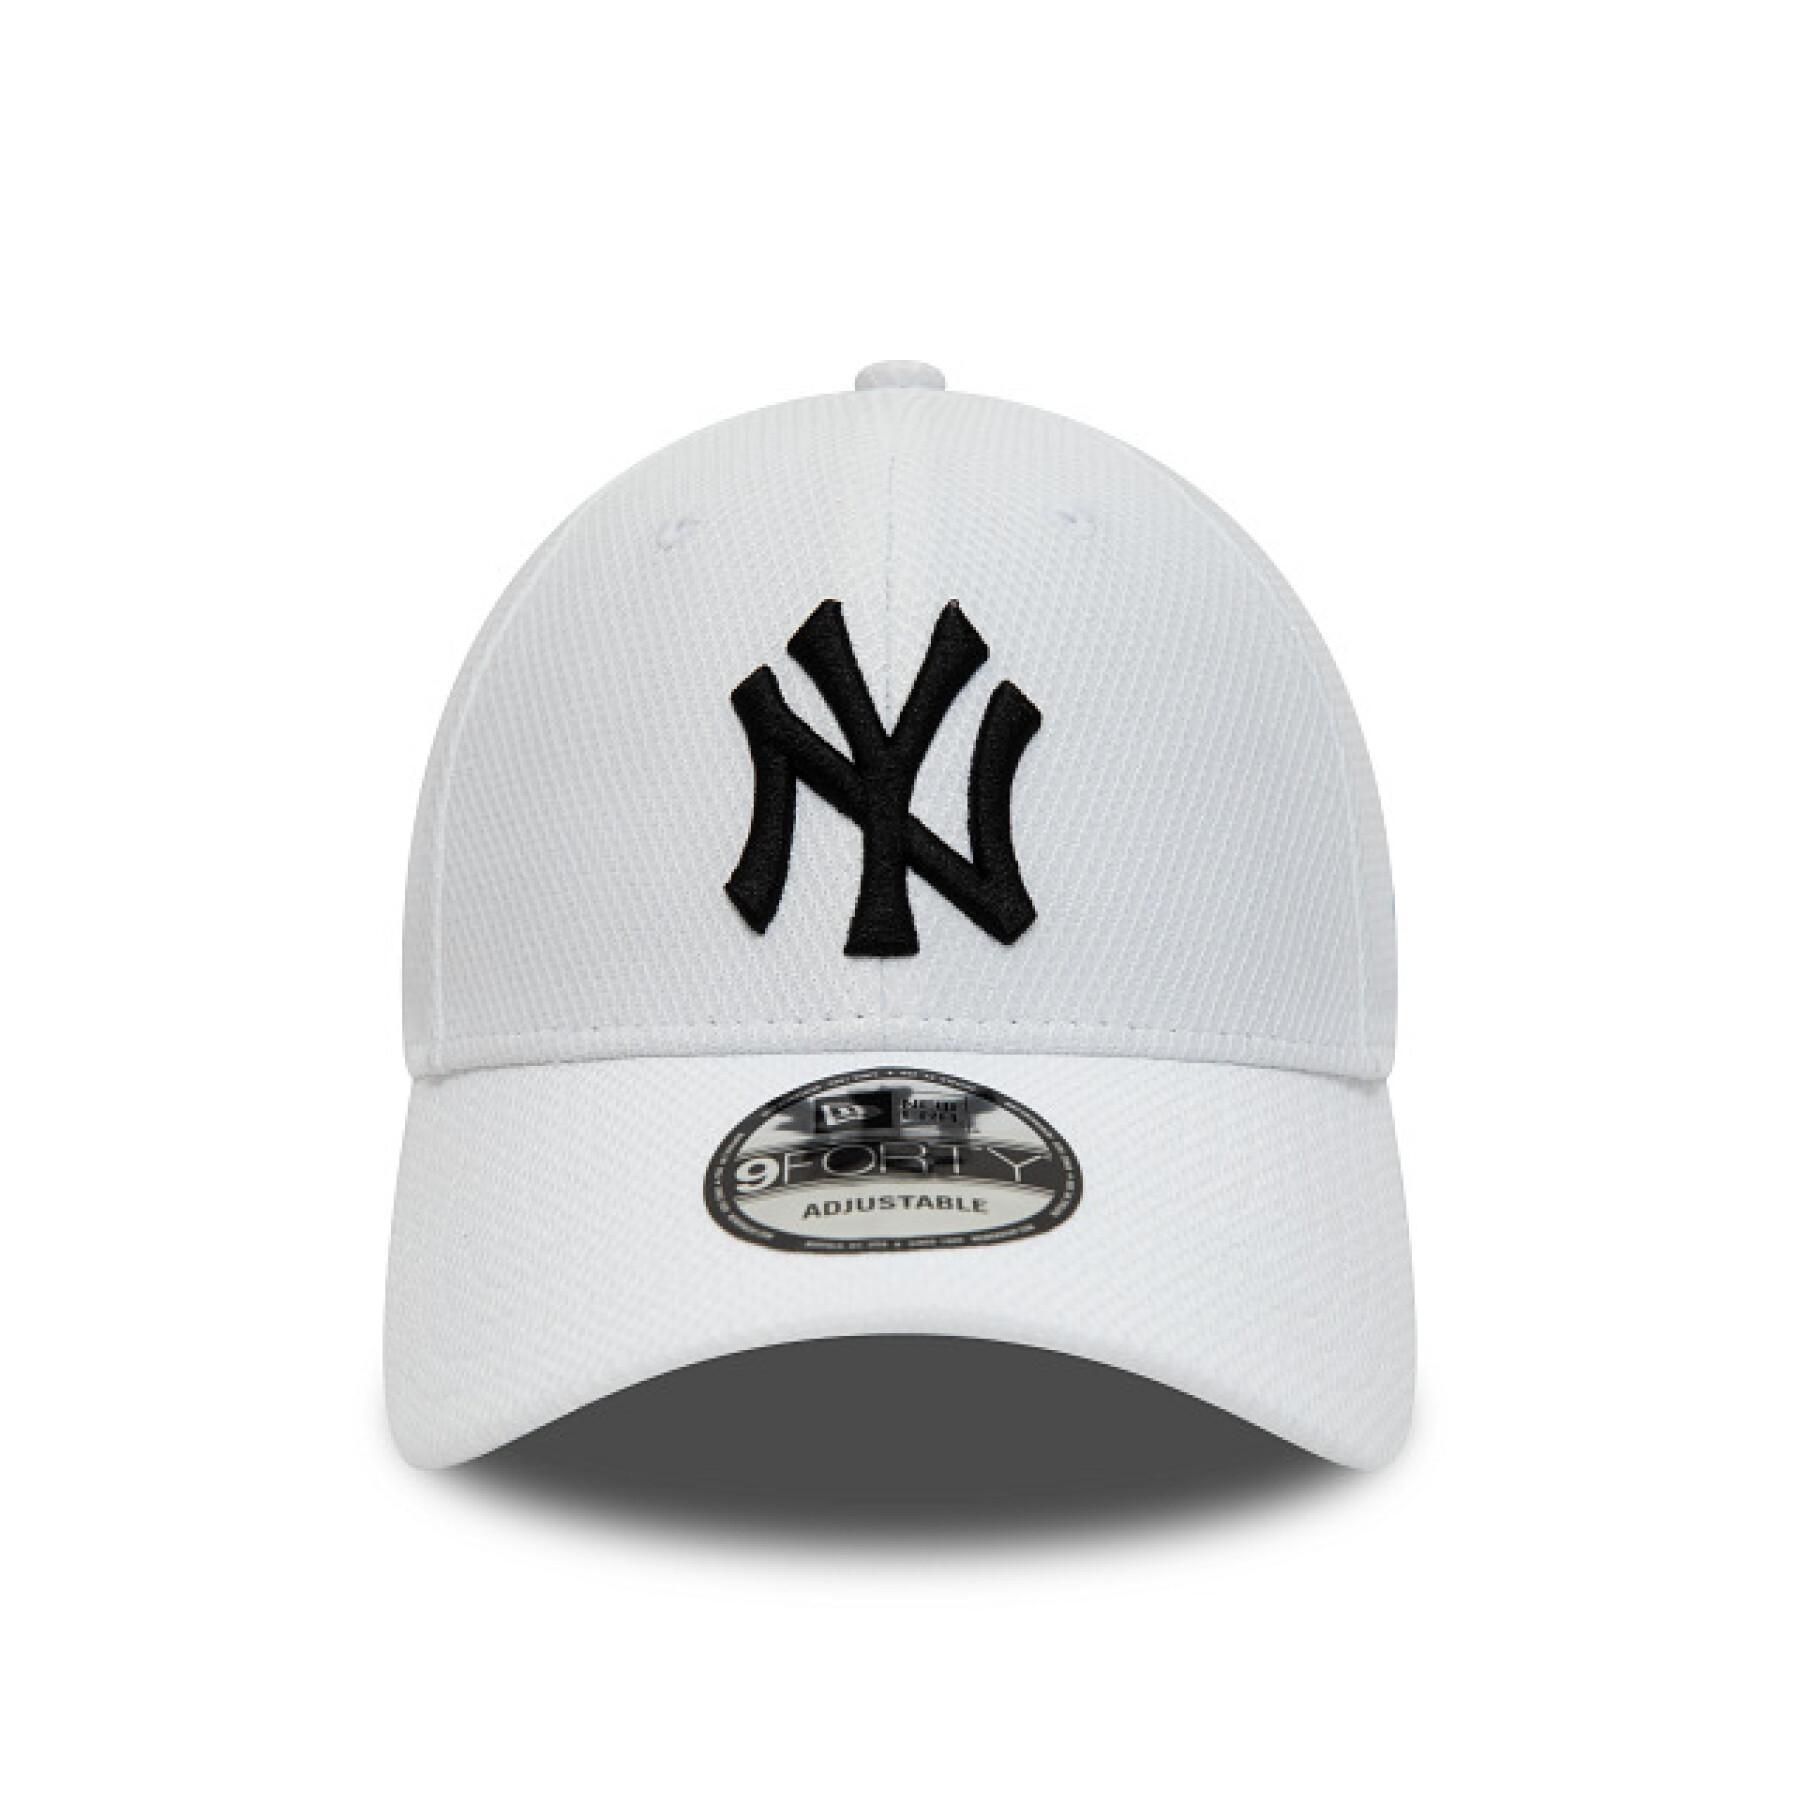 Boné New York Yankees Diamnd Era Ess 9FORTY